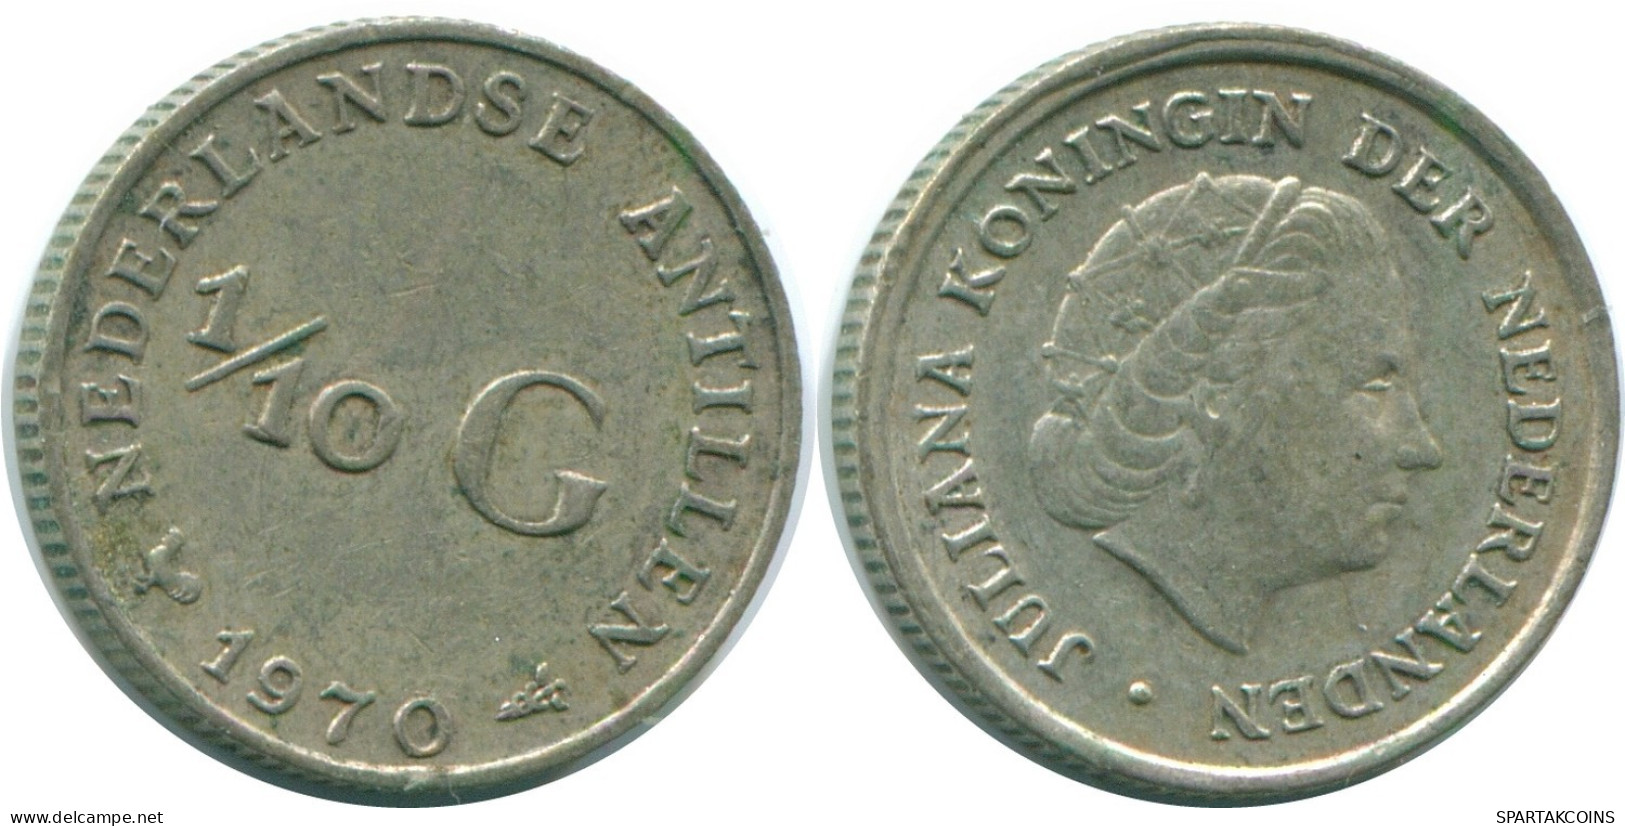 1/10 GULDEN 1970 NIEDERLÄNDISCHE ANTILLEN SILBER Koloniale Münze #NL13113.3.D.A - Netherlands Antilles